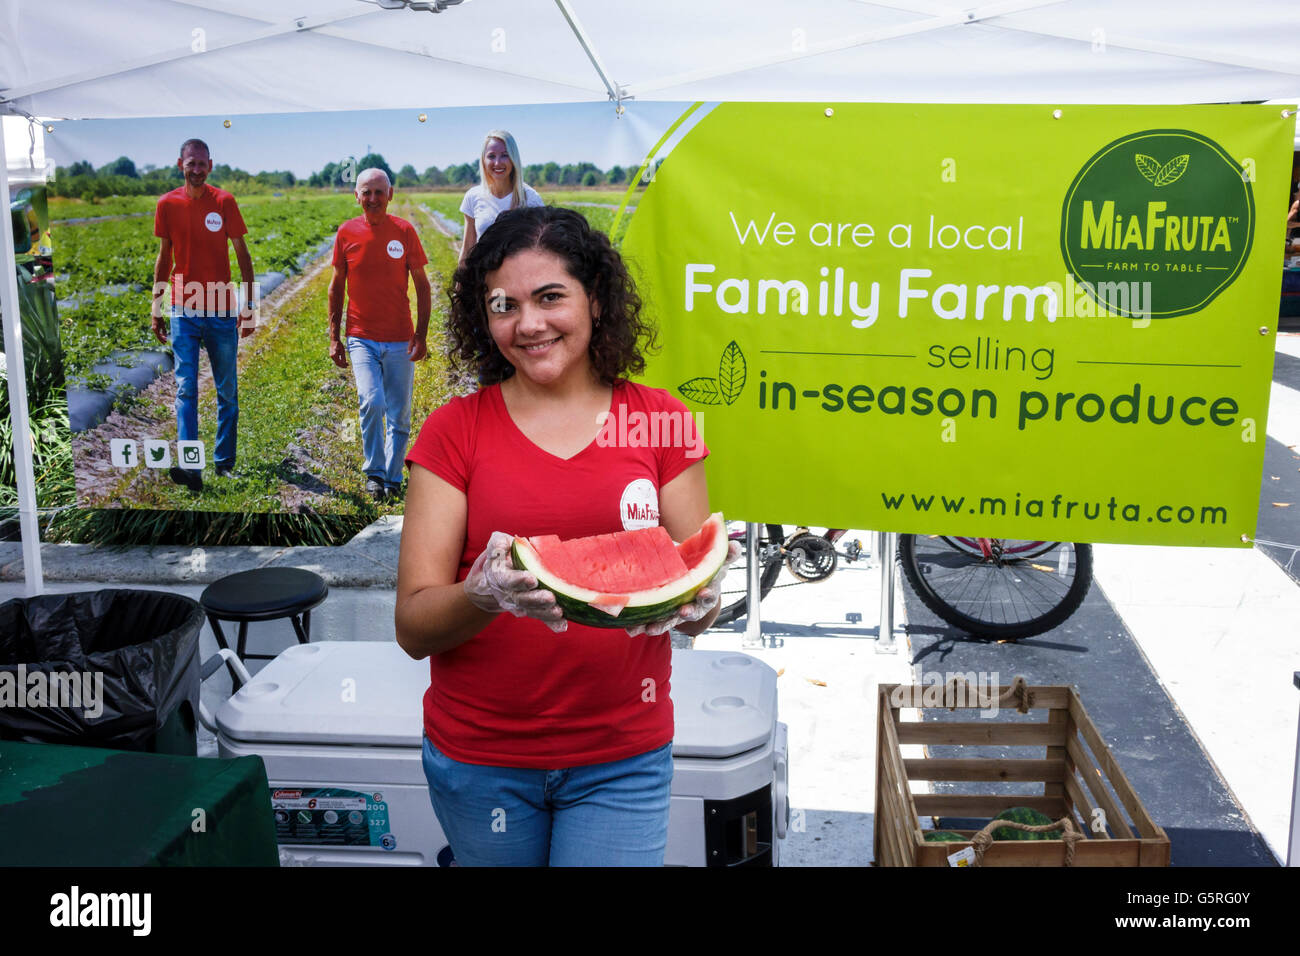 Miami Beach Florida,Lincoln Road,pedestrian mall,farmers market,sale,watermelon,local family farm,banner,promoting,FL160516020 Stock Photo